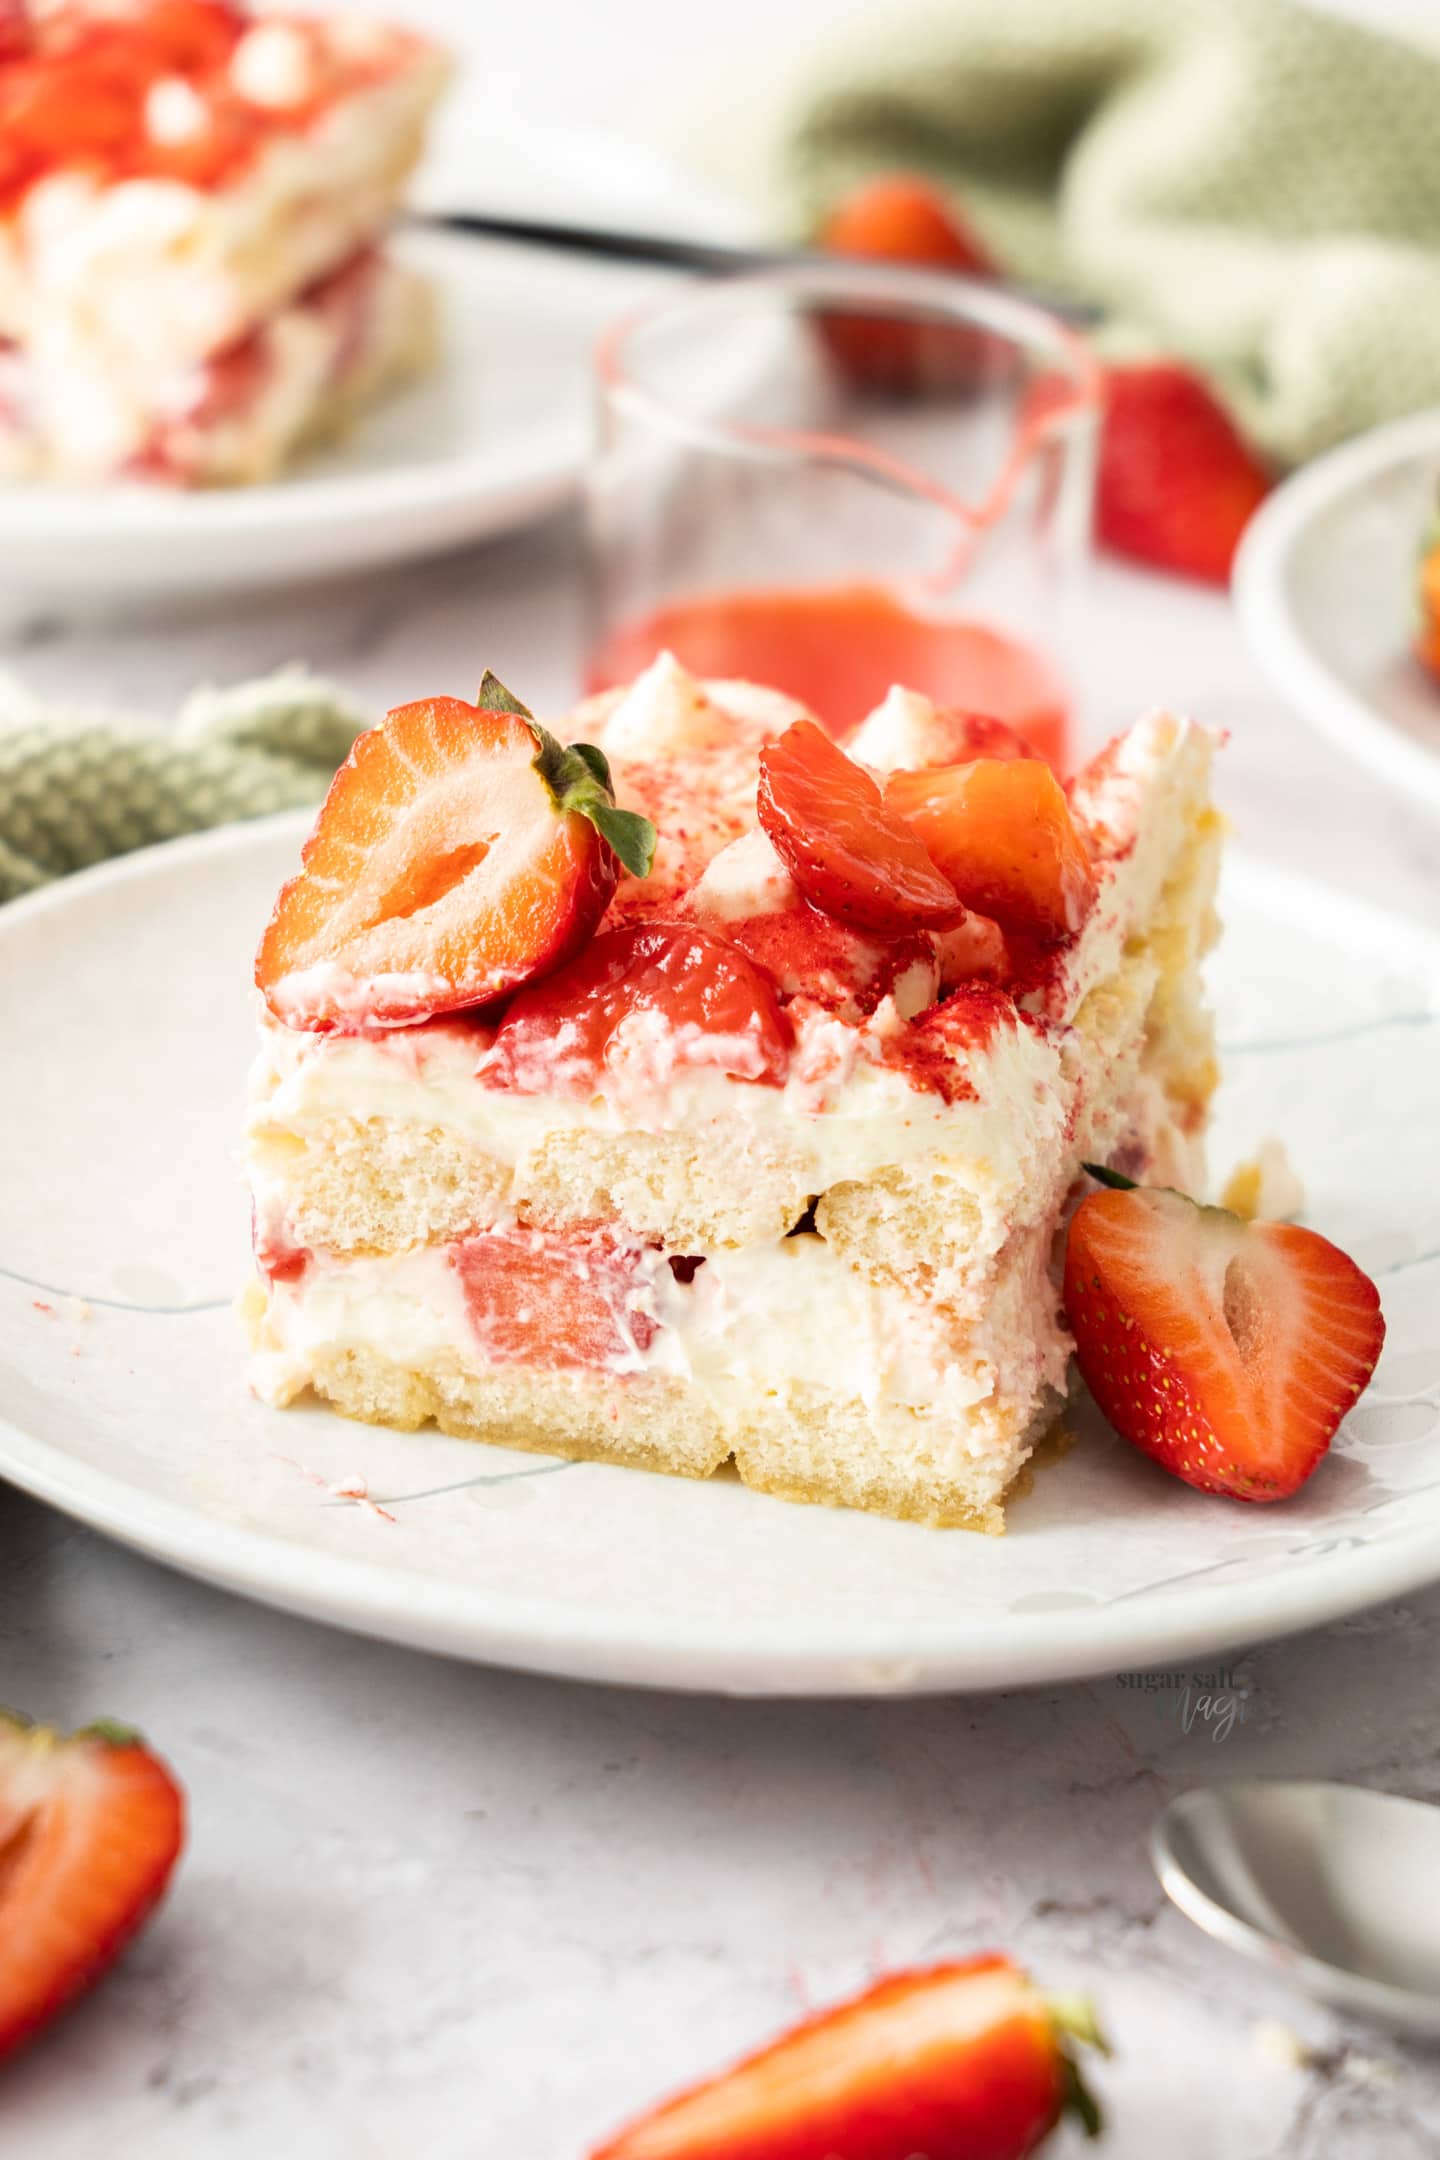 A square slice of strawberry tiramisu on a dessert plate.